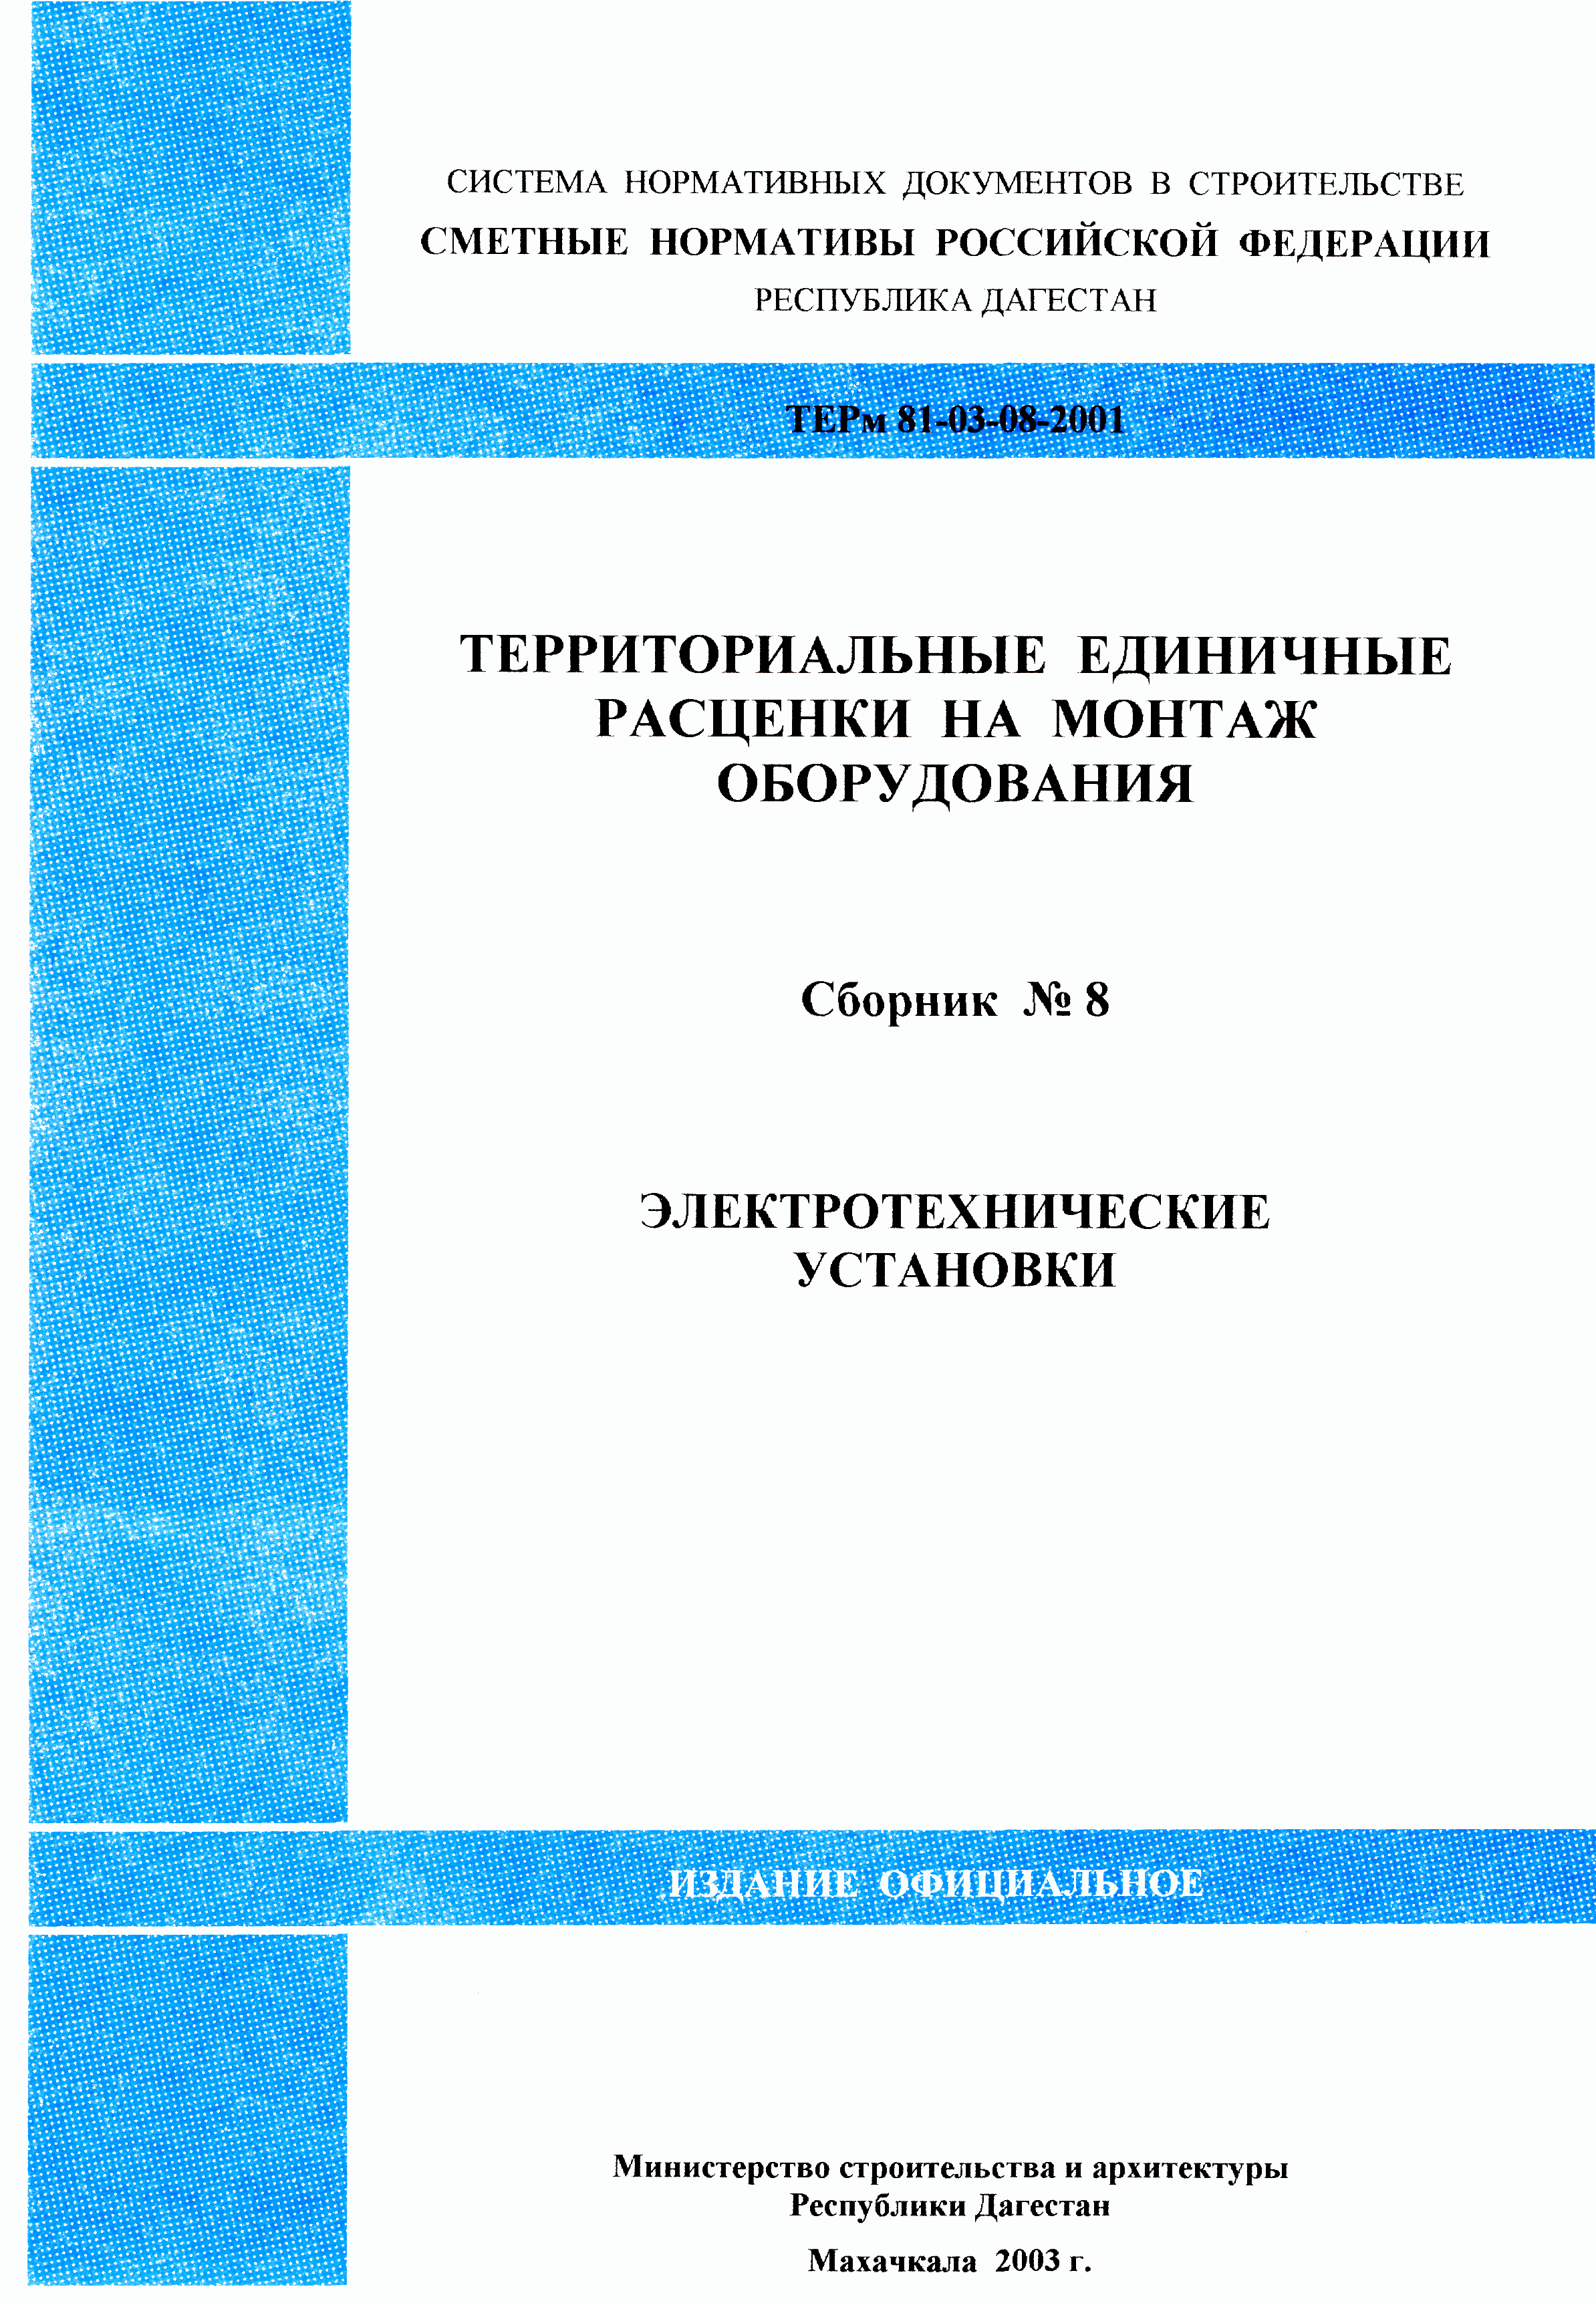 ТЕРм Республика Дагестан 2001-08